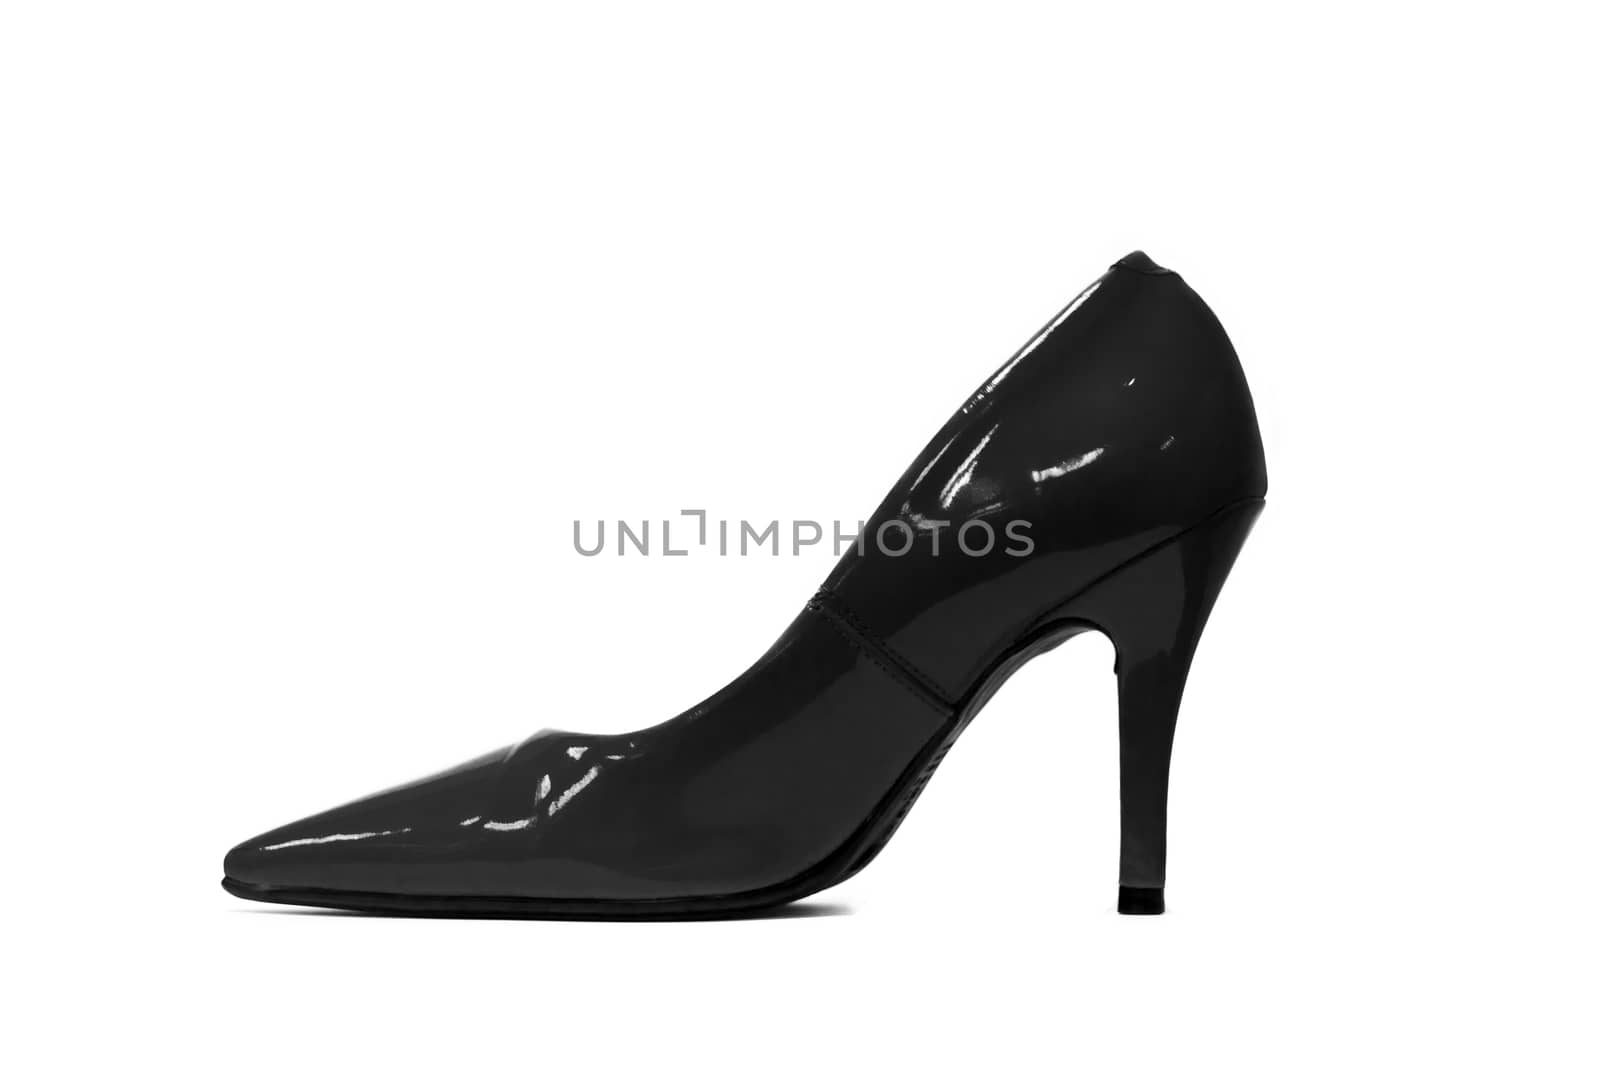 Isolated black high heel shoe by Charnsitr